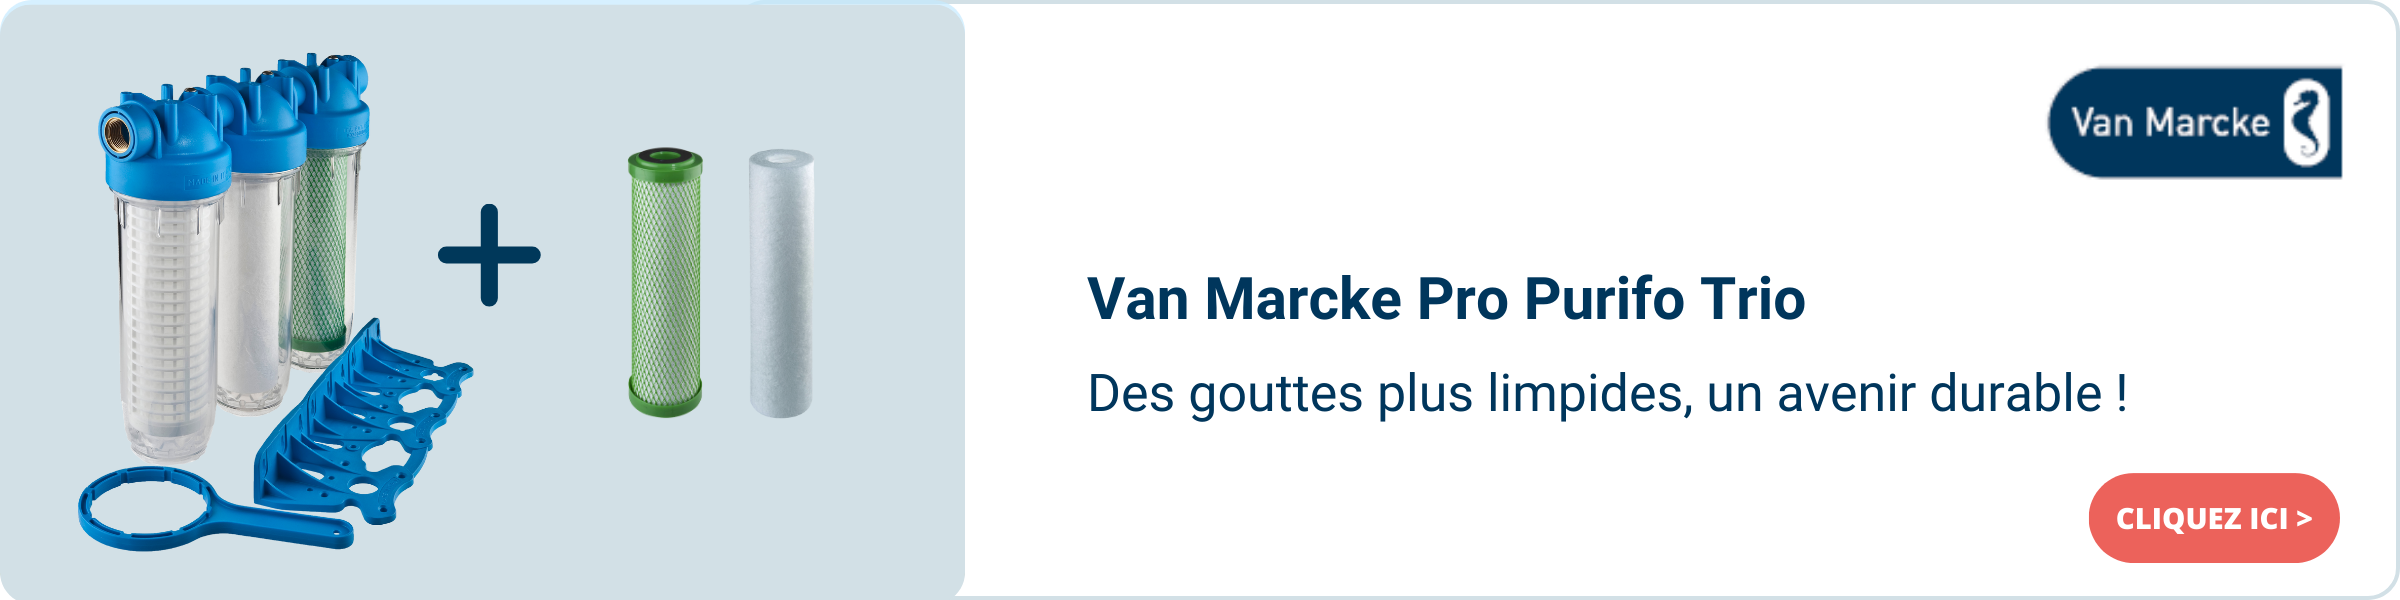 Van Marcke Pro Purifo Trio - FR.png